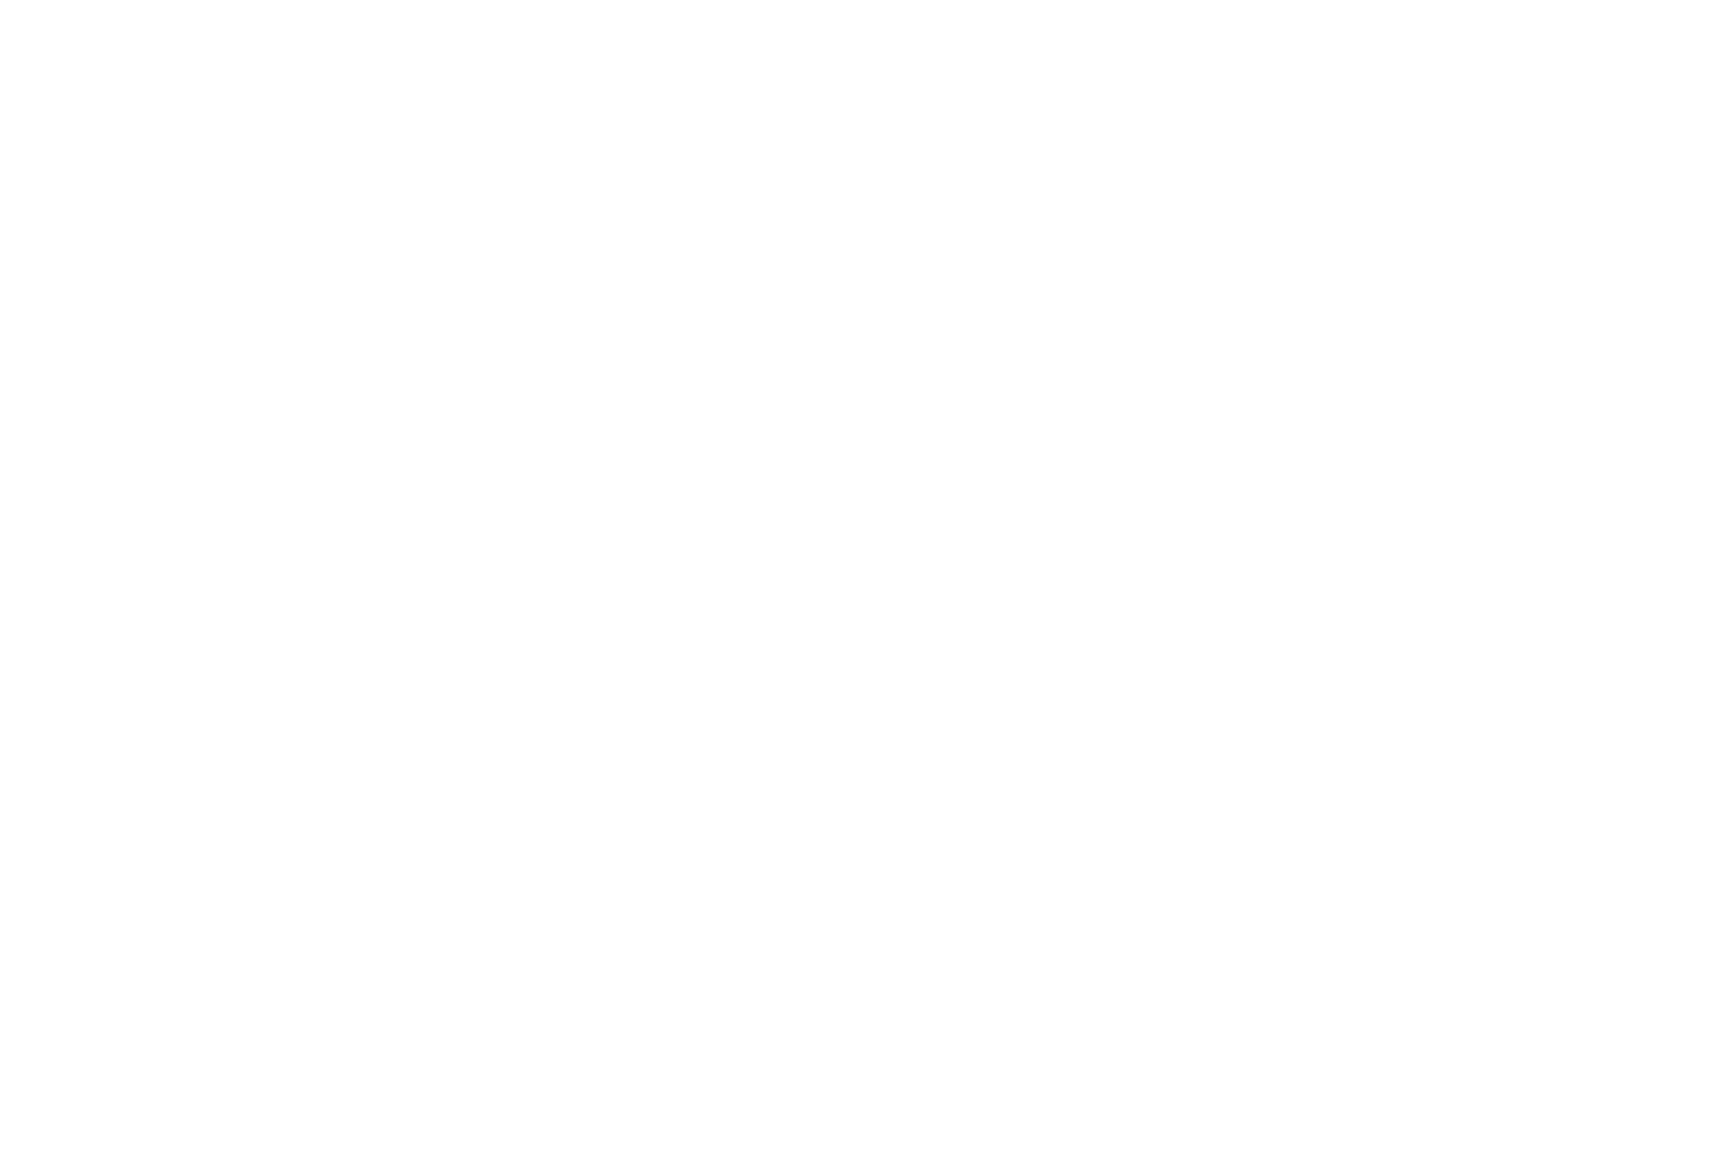 FINALIST - Banff Centre Mountain Film Festival - 2023.png